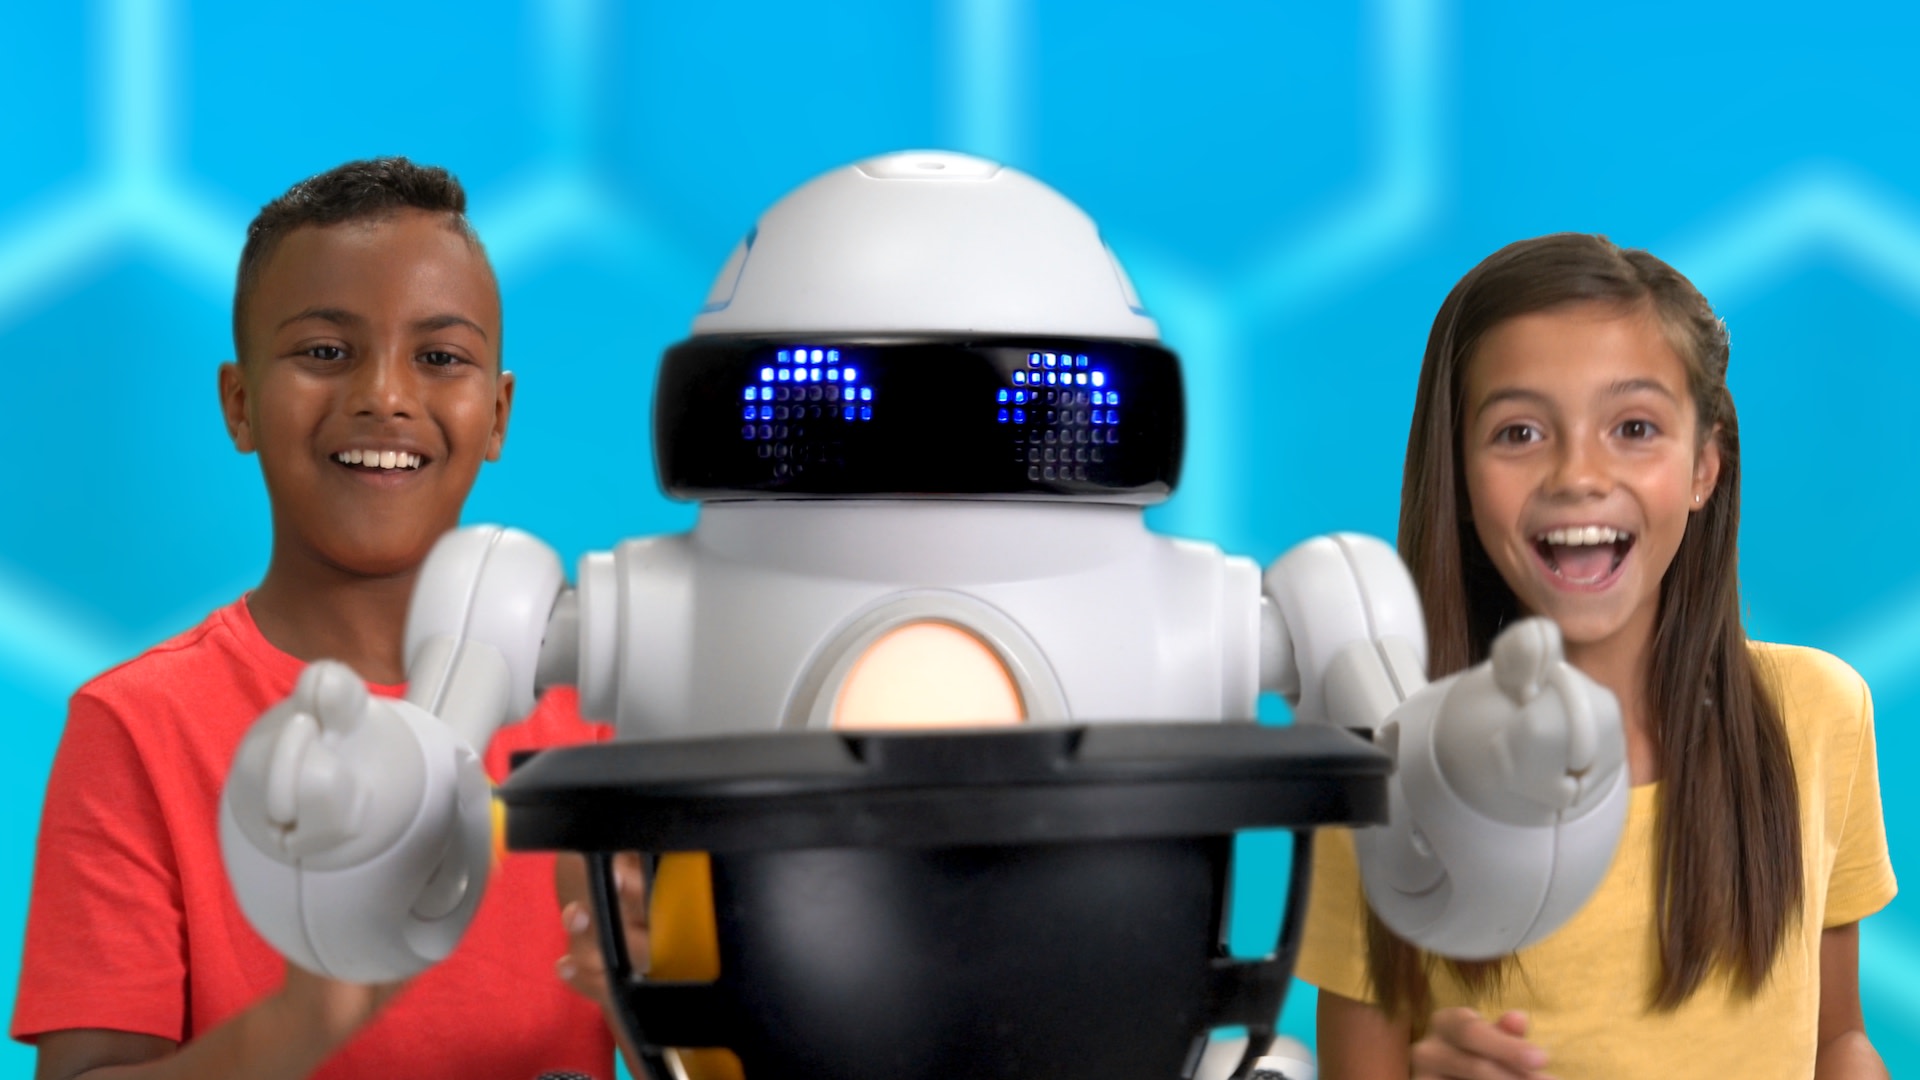 WowWee MIP Arcade Self-balancing Robot Sidekick 20 Games Toys for sale online 